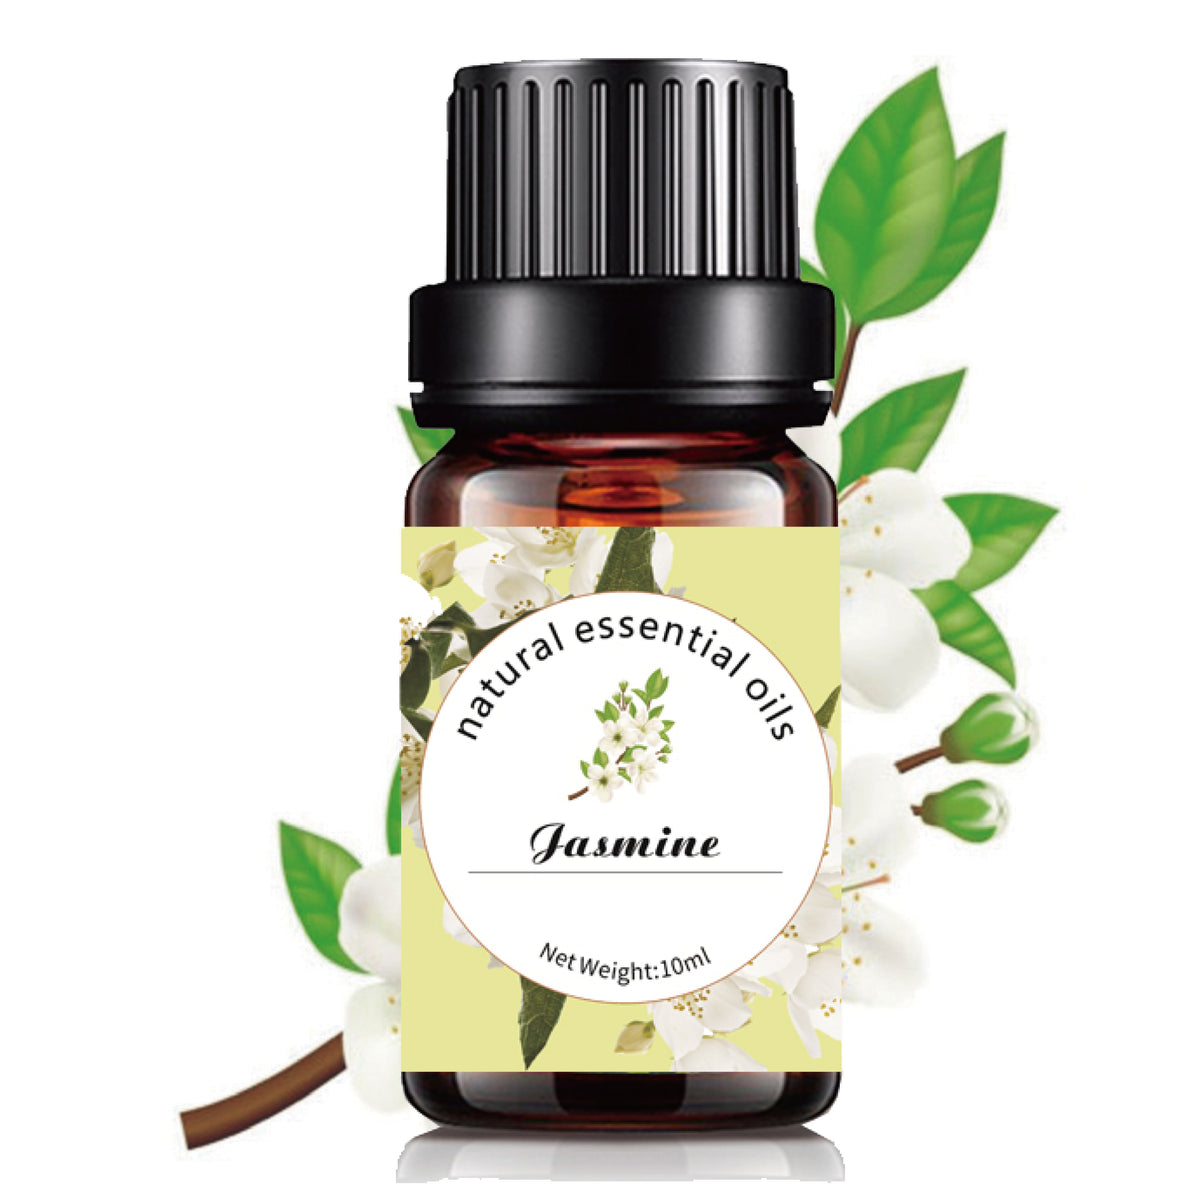 Jasmine - 10ml pure natural essential oil